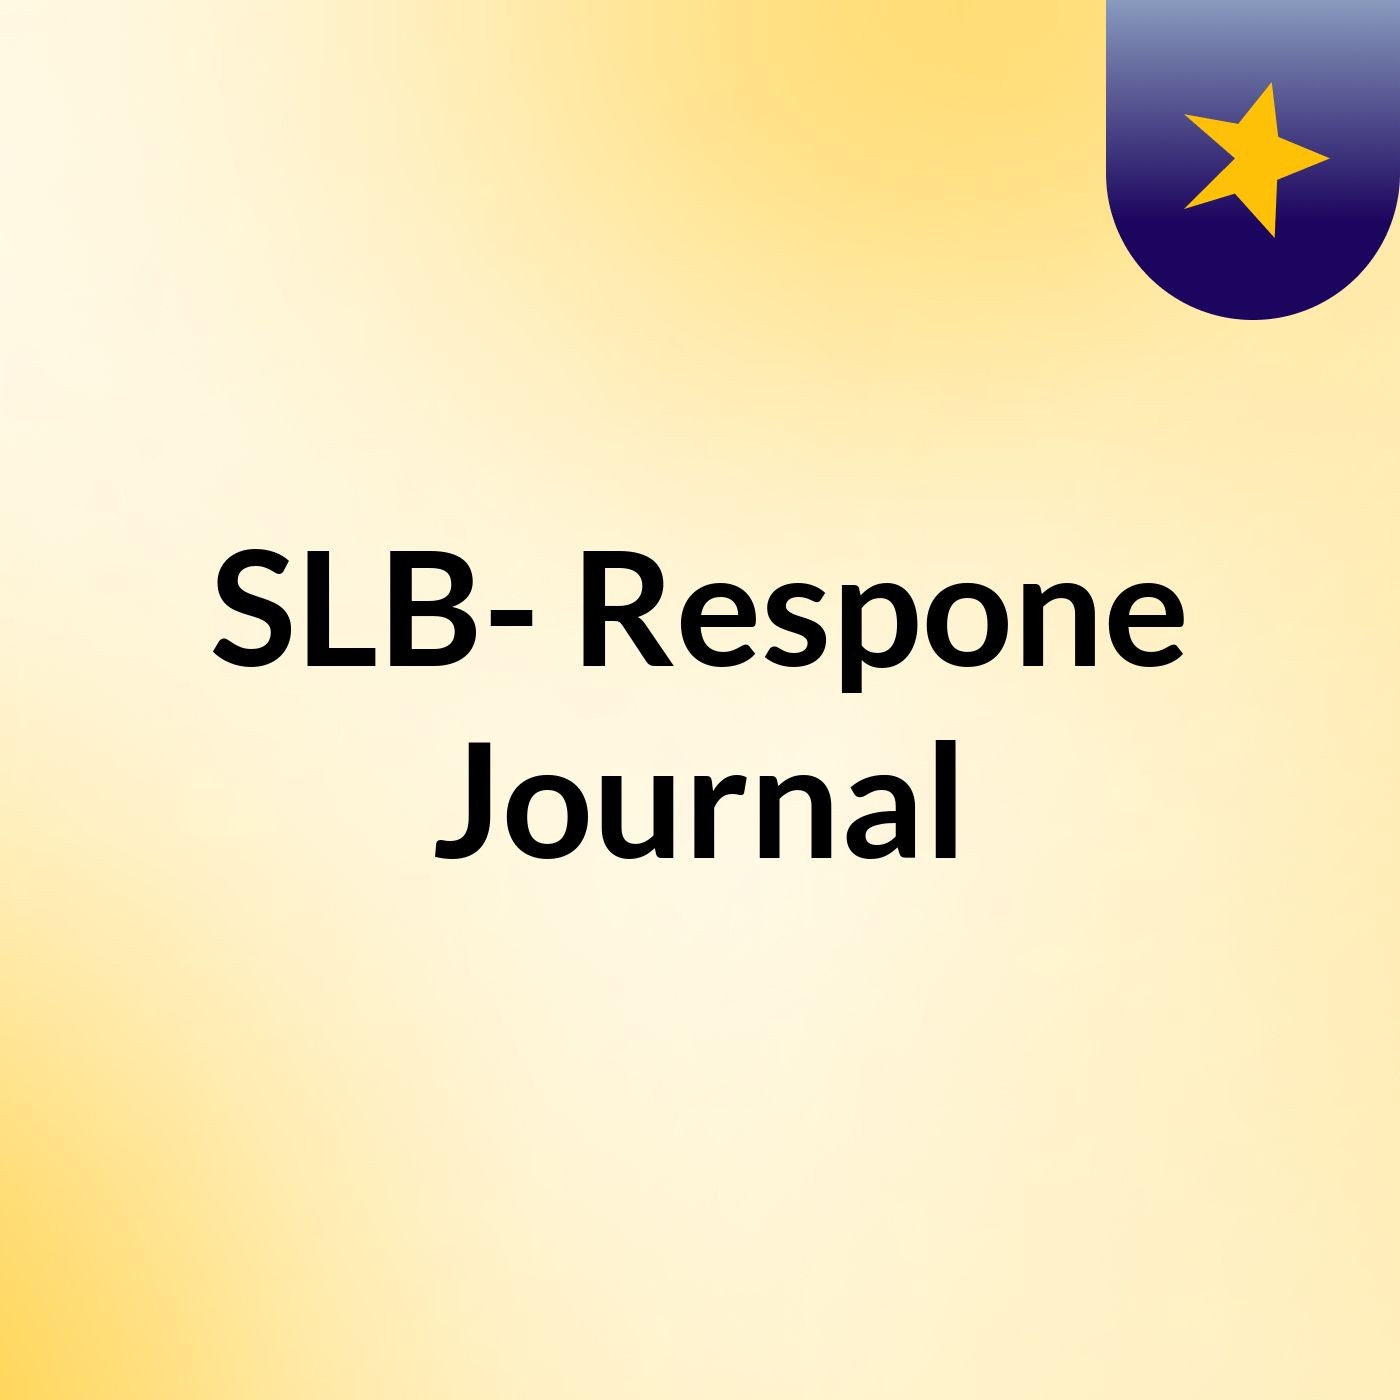 SLB- Respone Journal